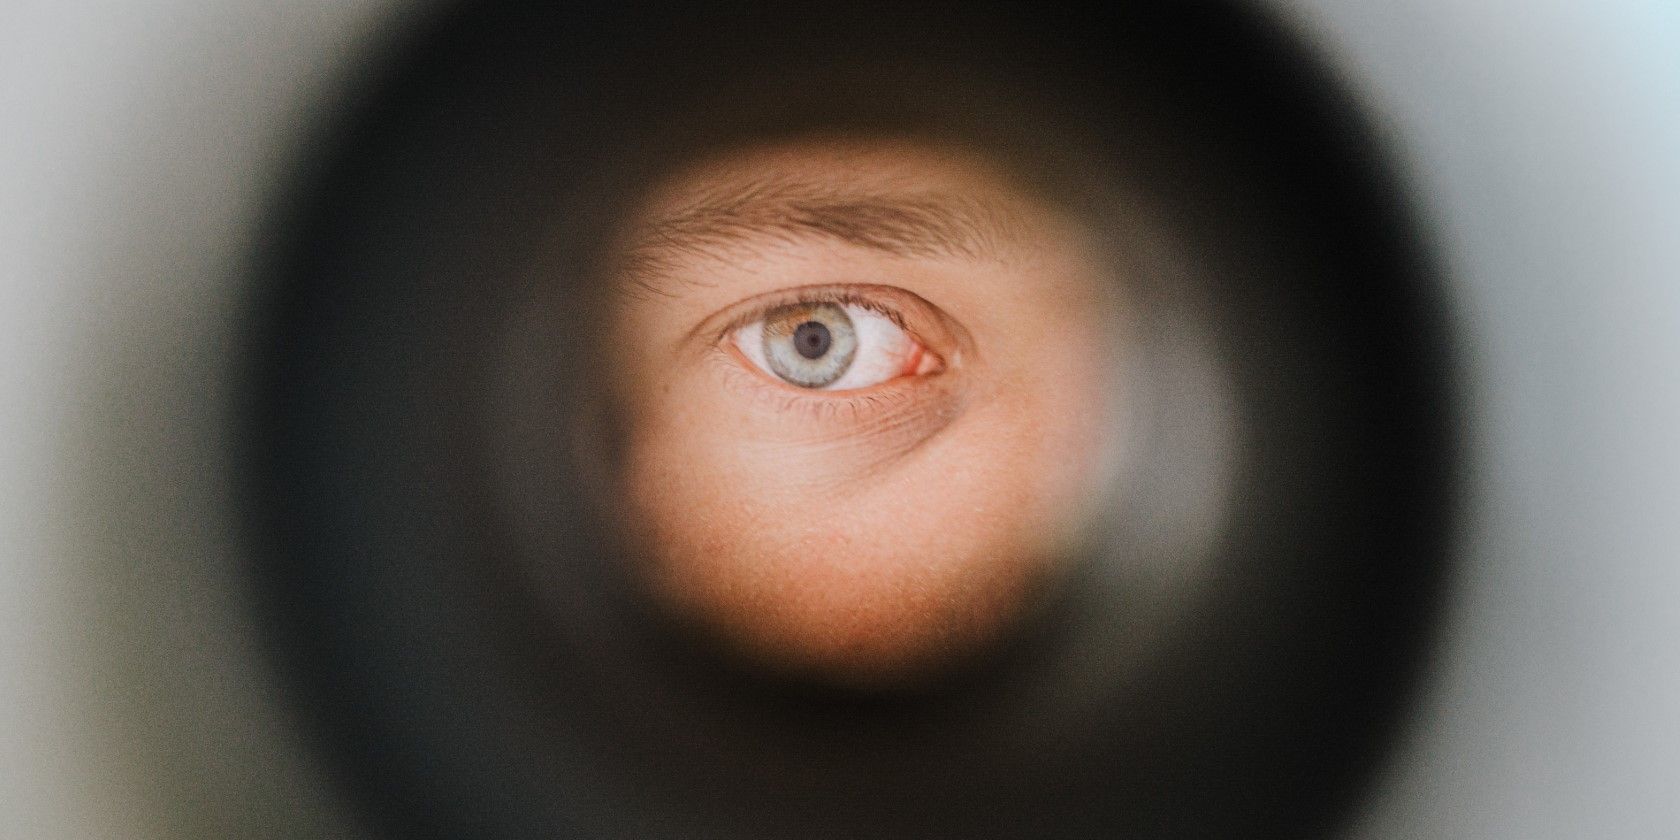 Eye looking through a scope